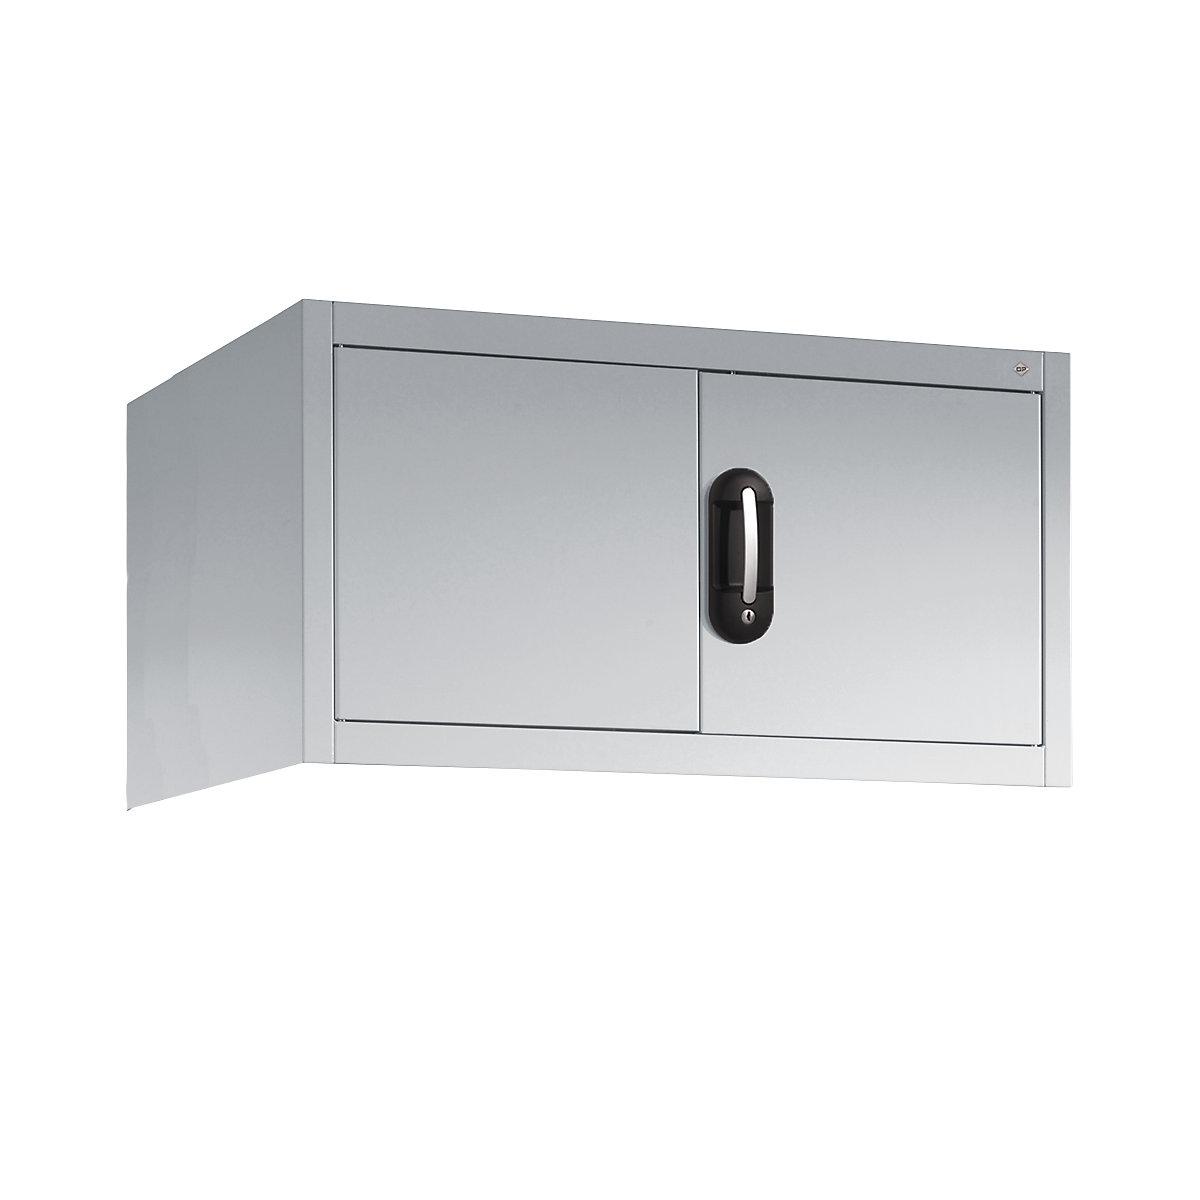 ACURADO add-on cupboard with hinged doors - C+P